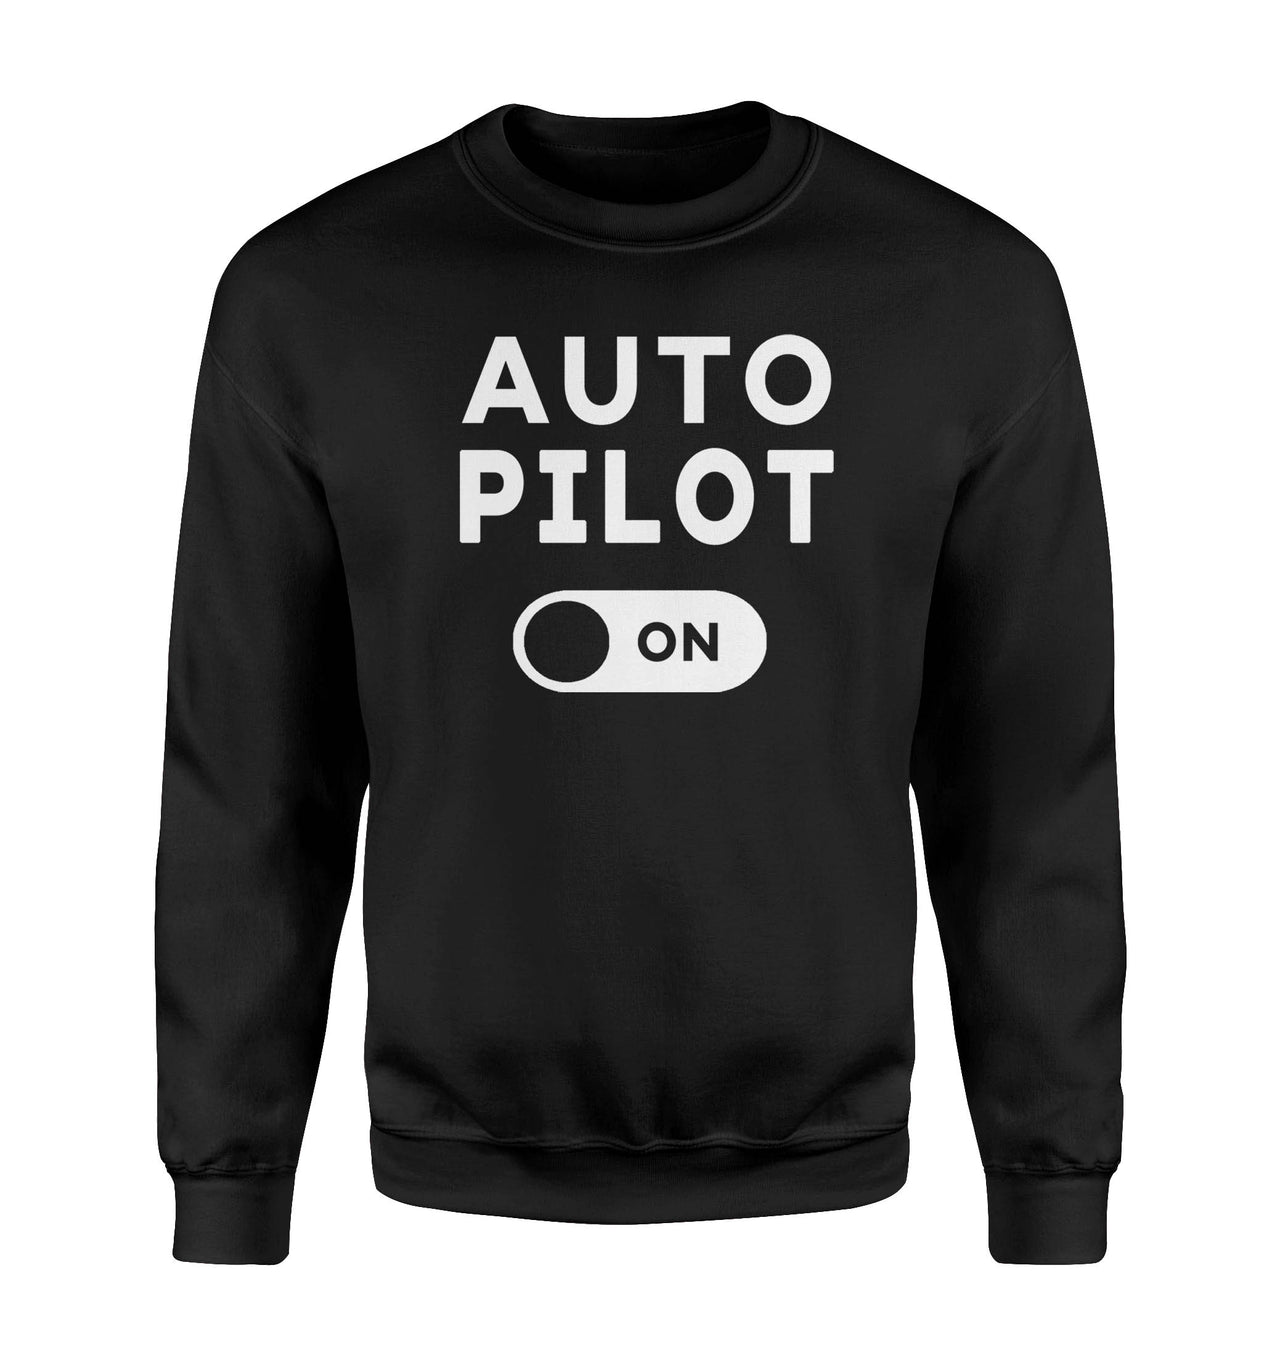 Auto Pilot ON Designed Sweatshirts